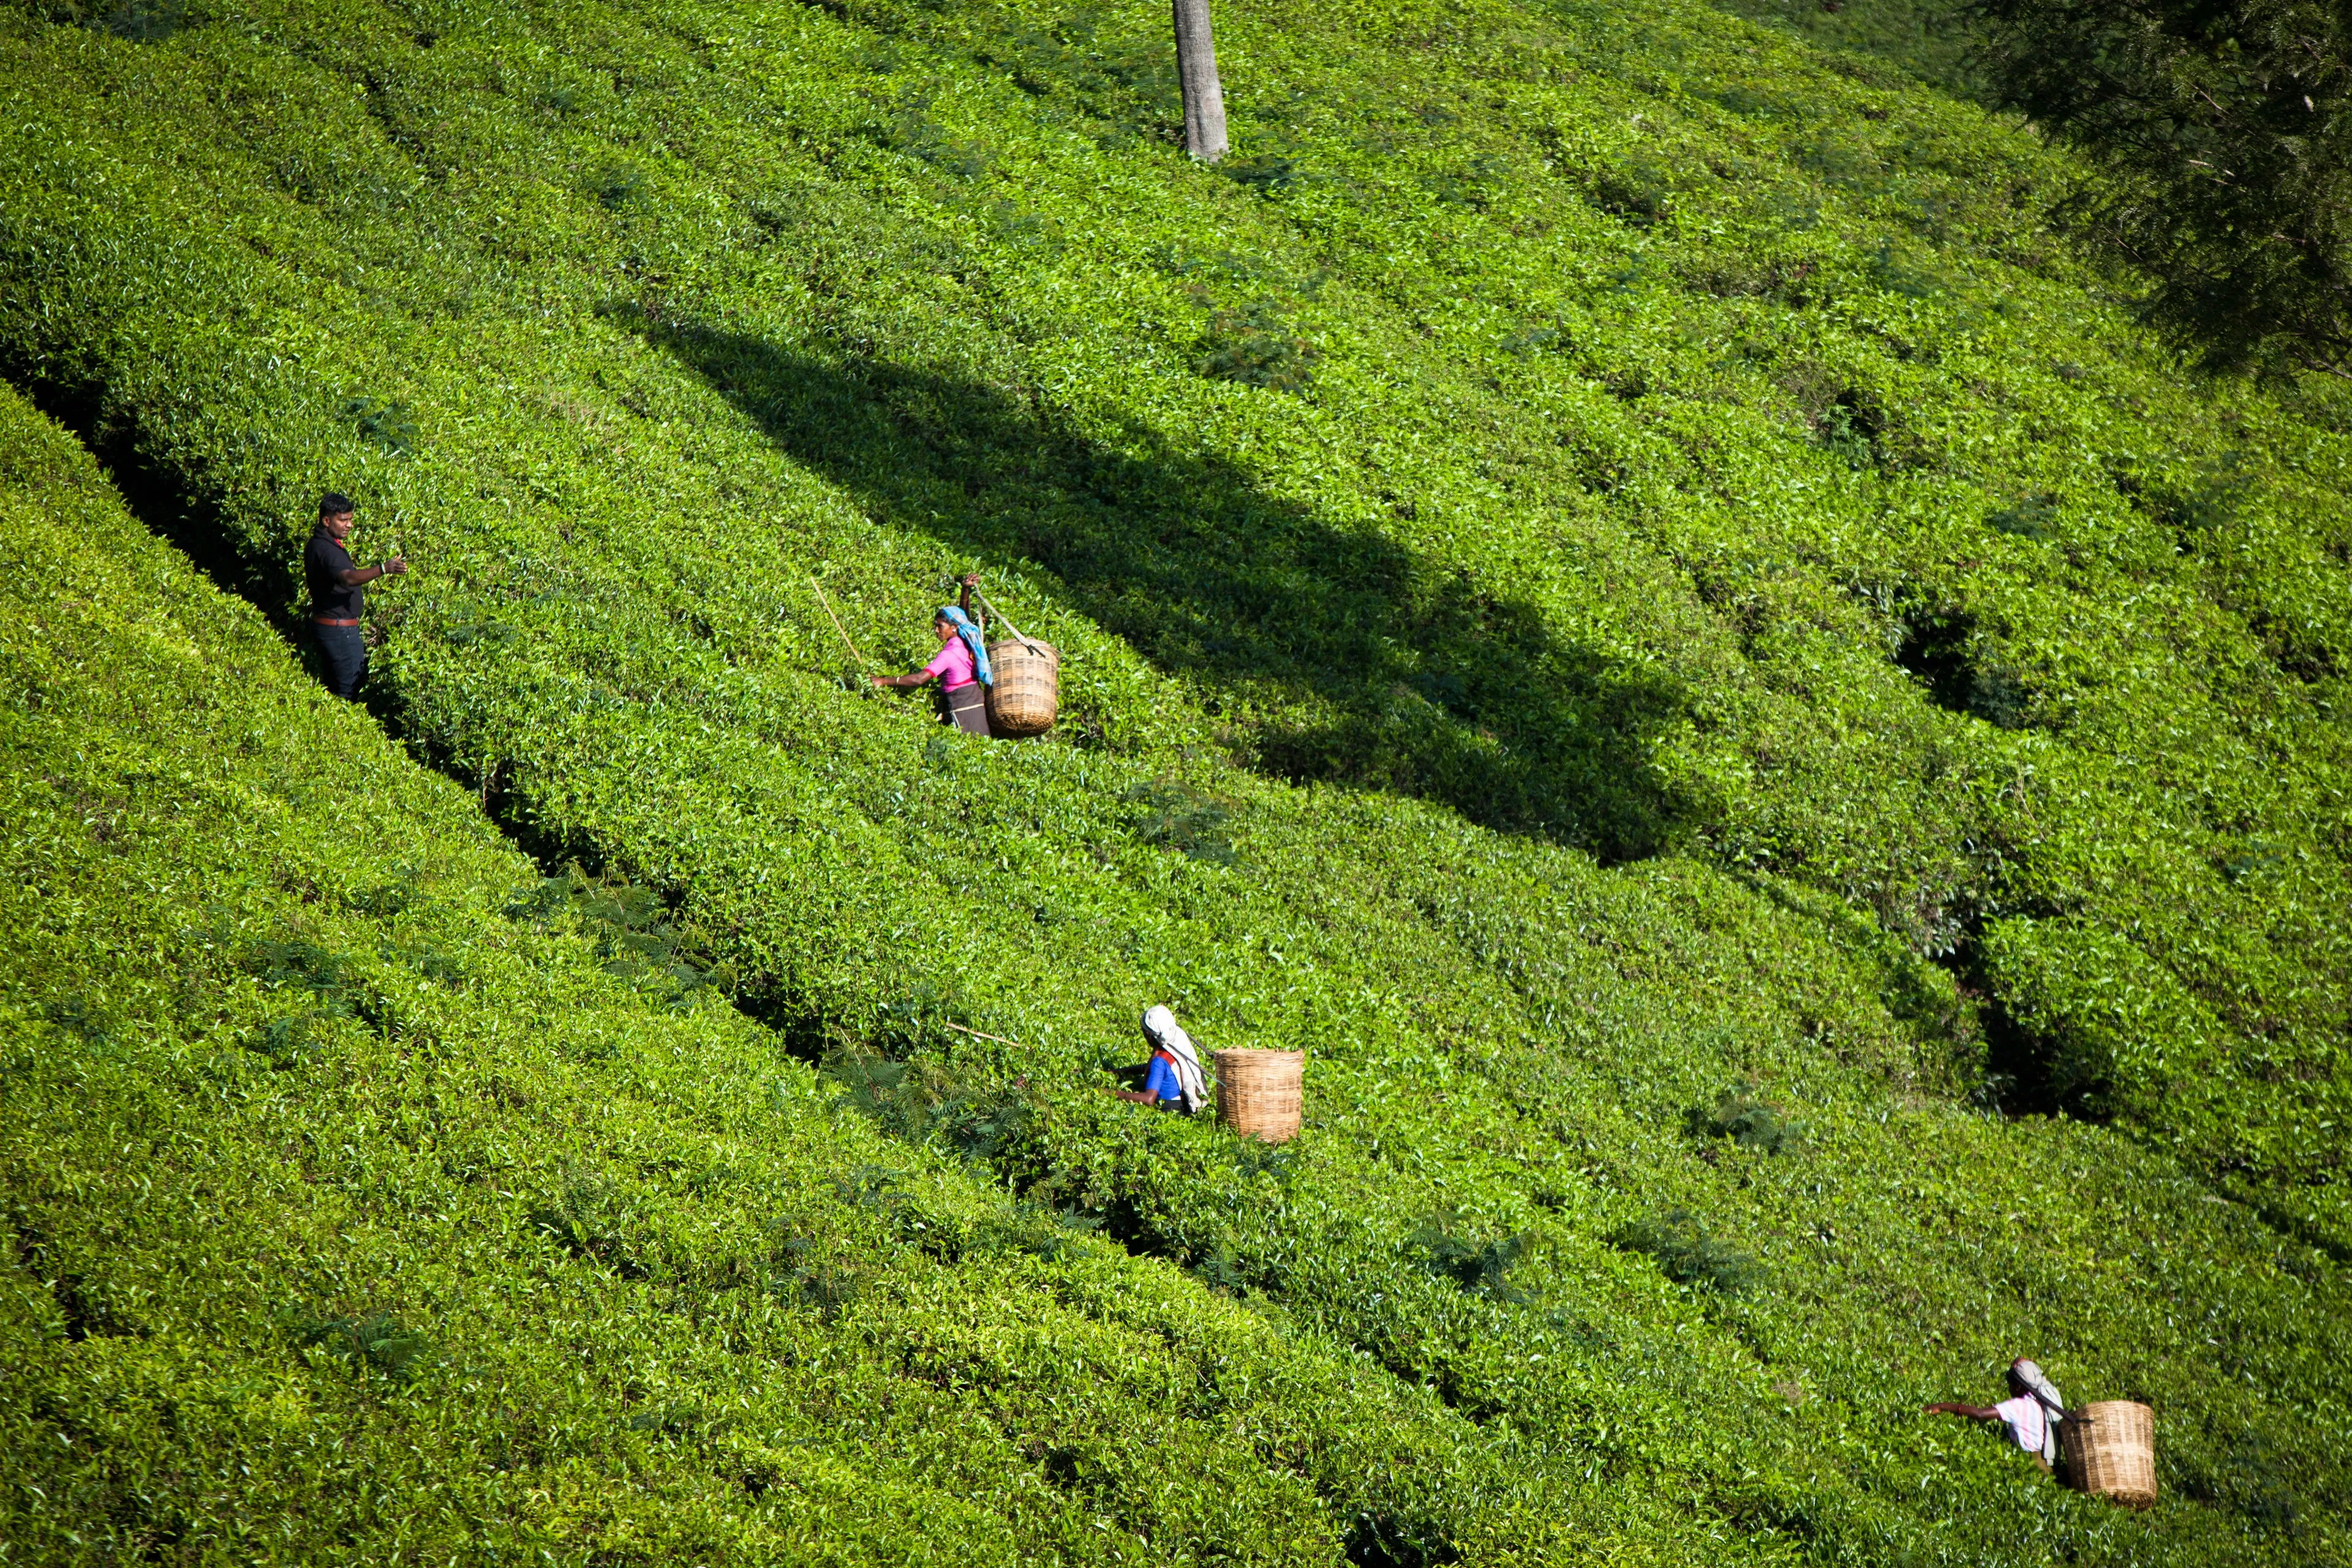 Tea pickers in the tea fields at the Dunkeld tea estate